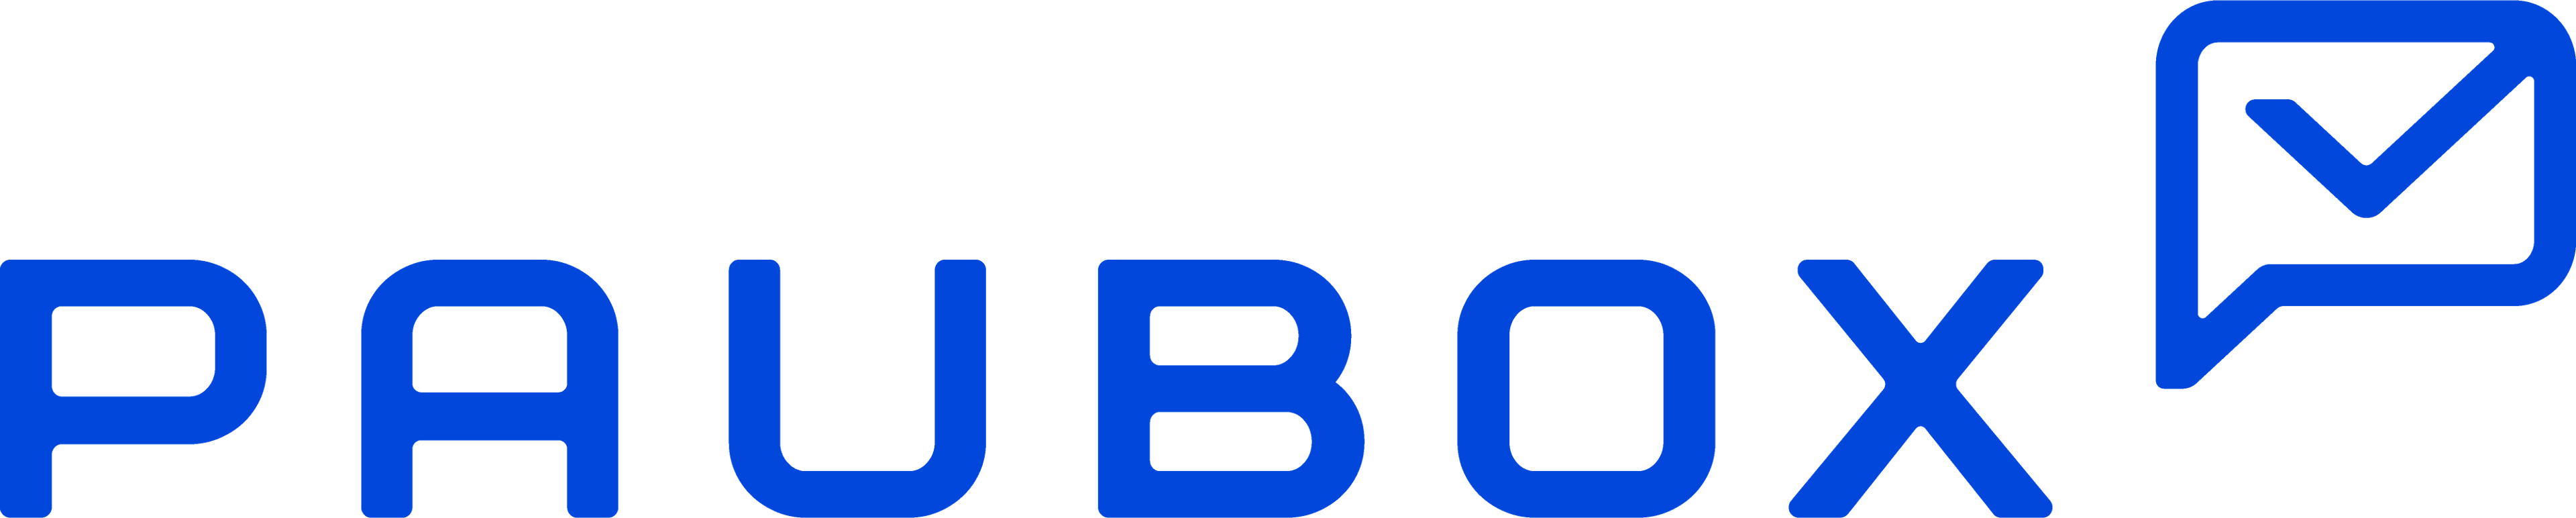 Paubox Email Suite Logo